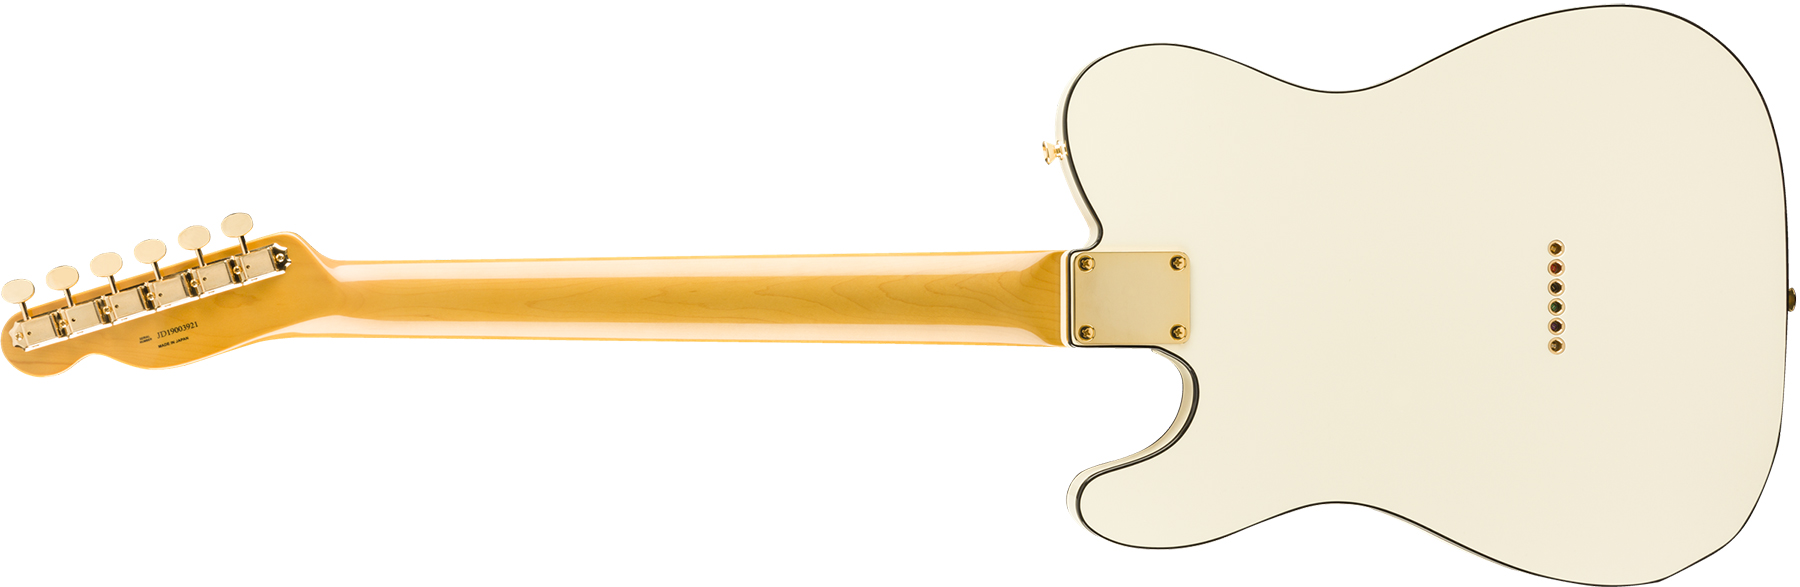 Fender Tele Daybreak Ltd 2019 Japon Gh Rw - Olympic White - Tel shape electric guitar - Variation 1